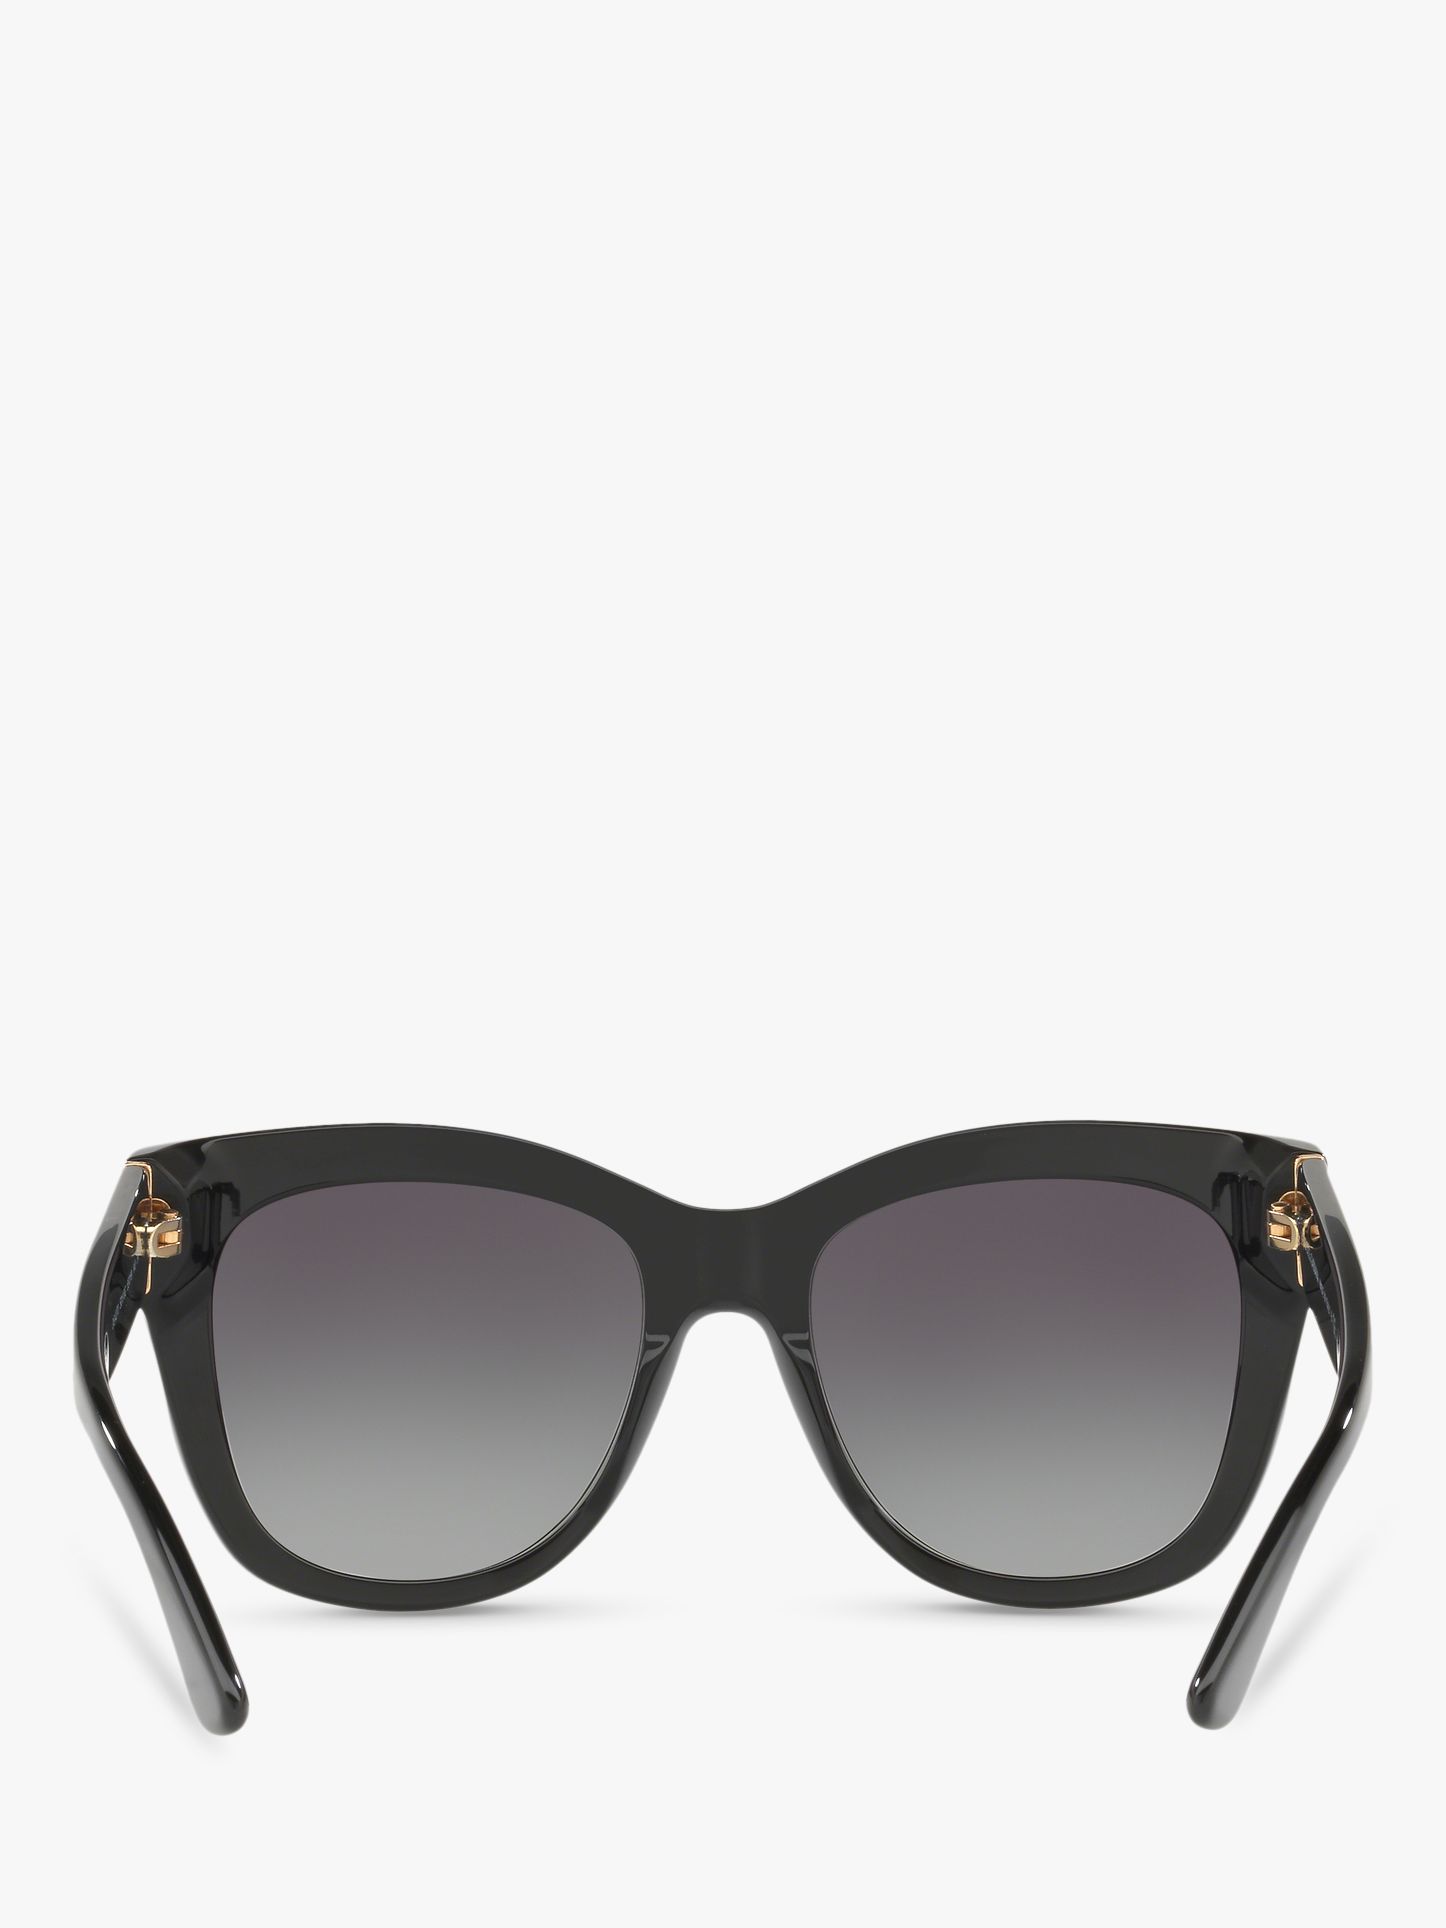  dg4270 blackgrey gradient gabbana womens square dolce sunglasses online